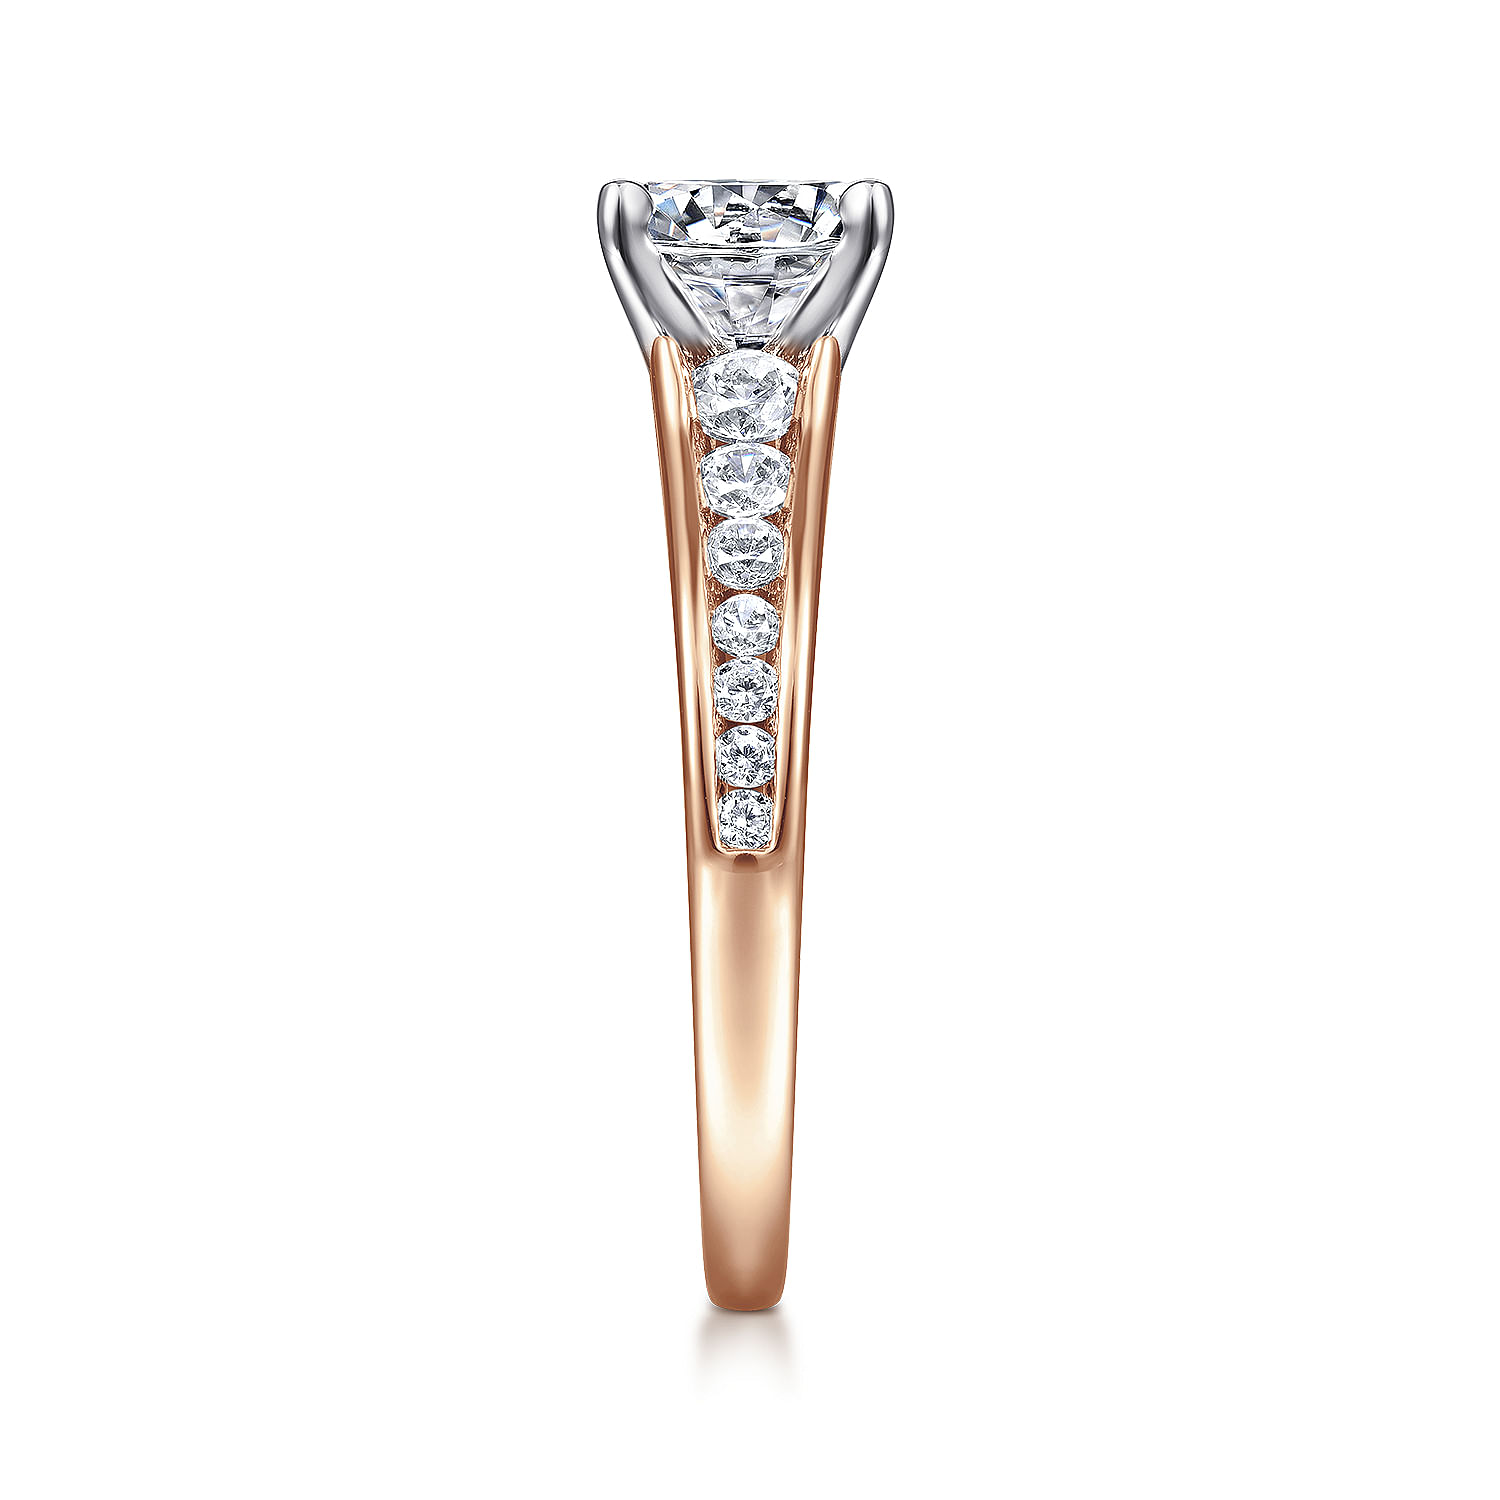 14K White-Rose Gold Round Diamond Channel Set Engagement Ring